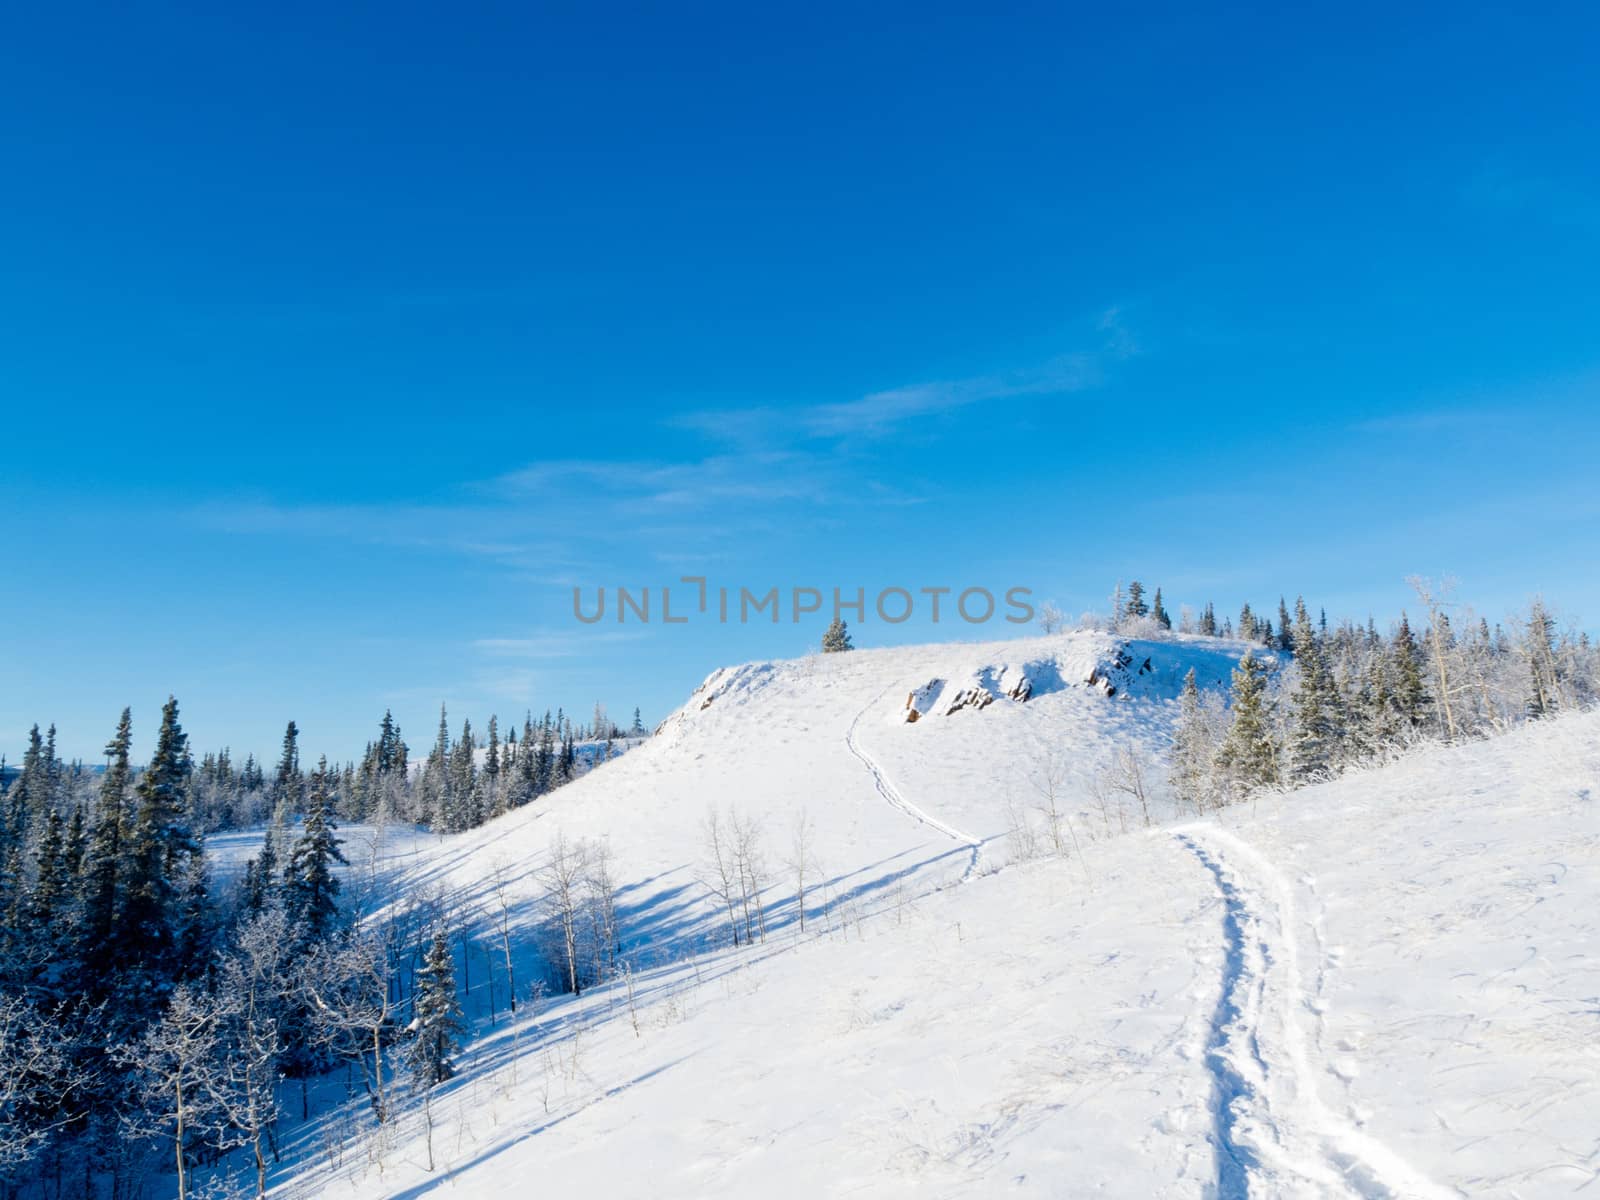 Snowy winter hills snowshoe track wonderland scene by PiLens